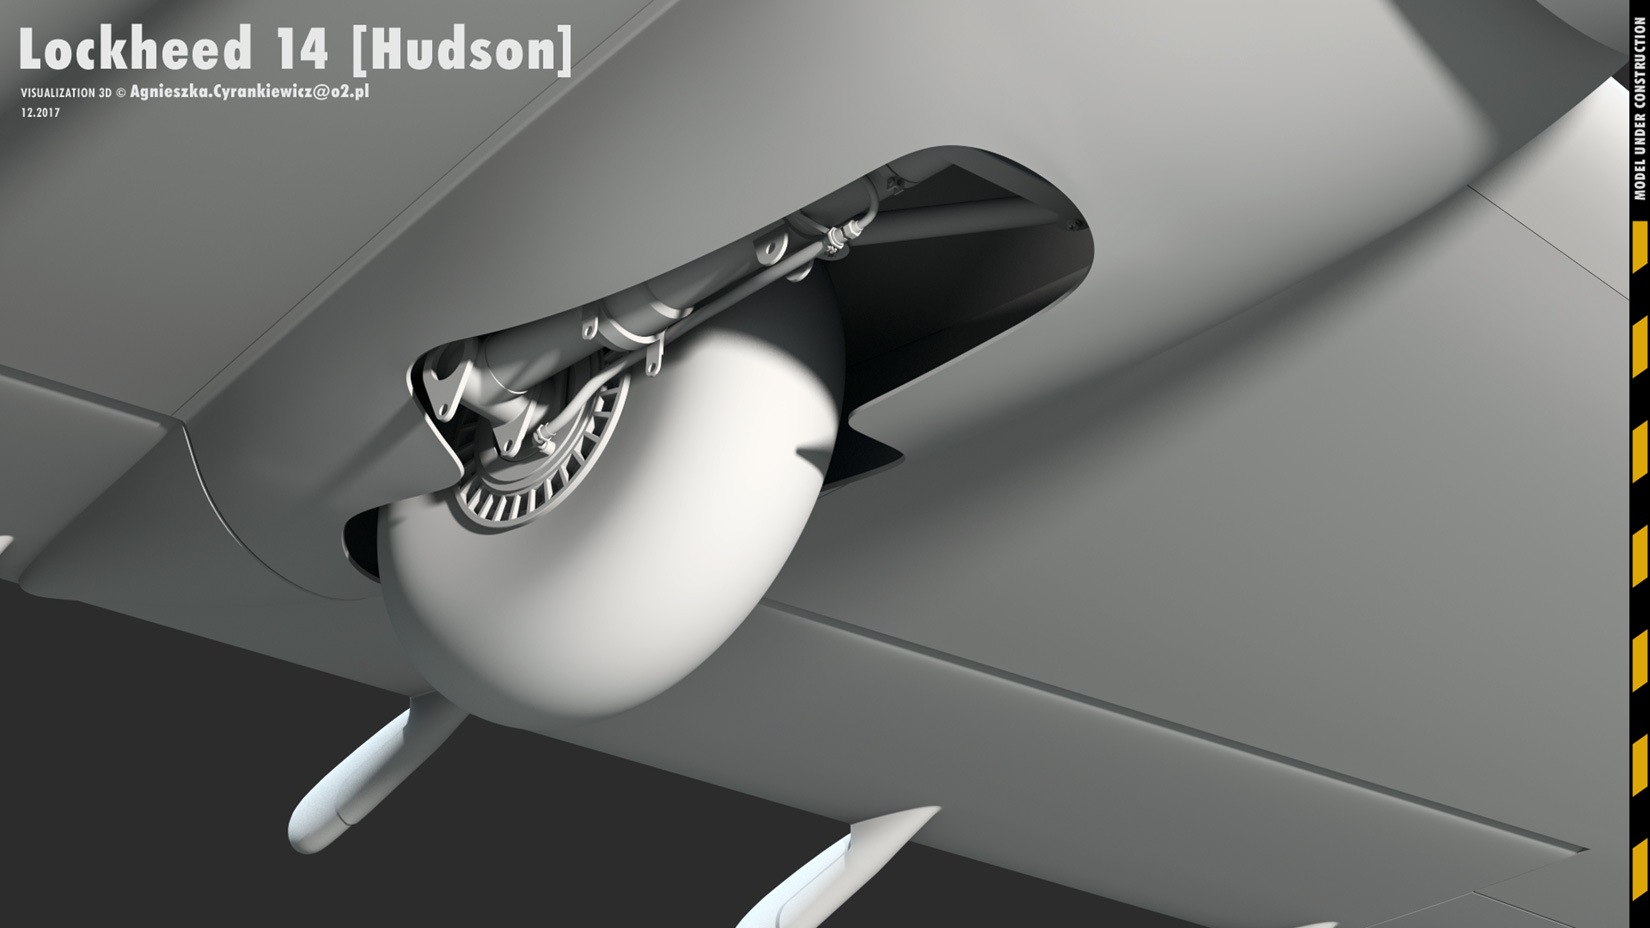 Lockheed Model 14 Super Electra, lockheed hudson, render, 3D, graphics, graphic, Mac Pro